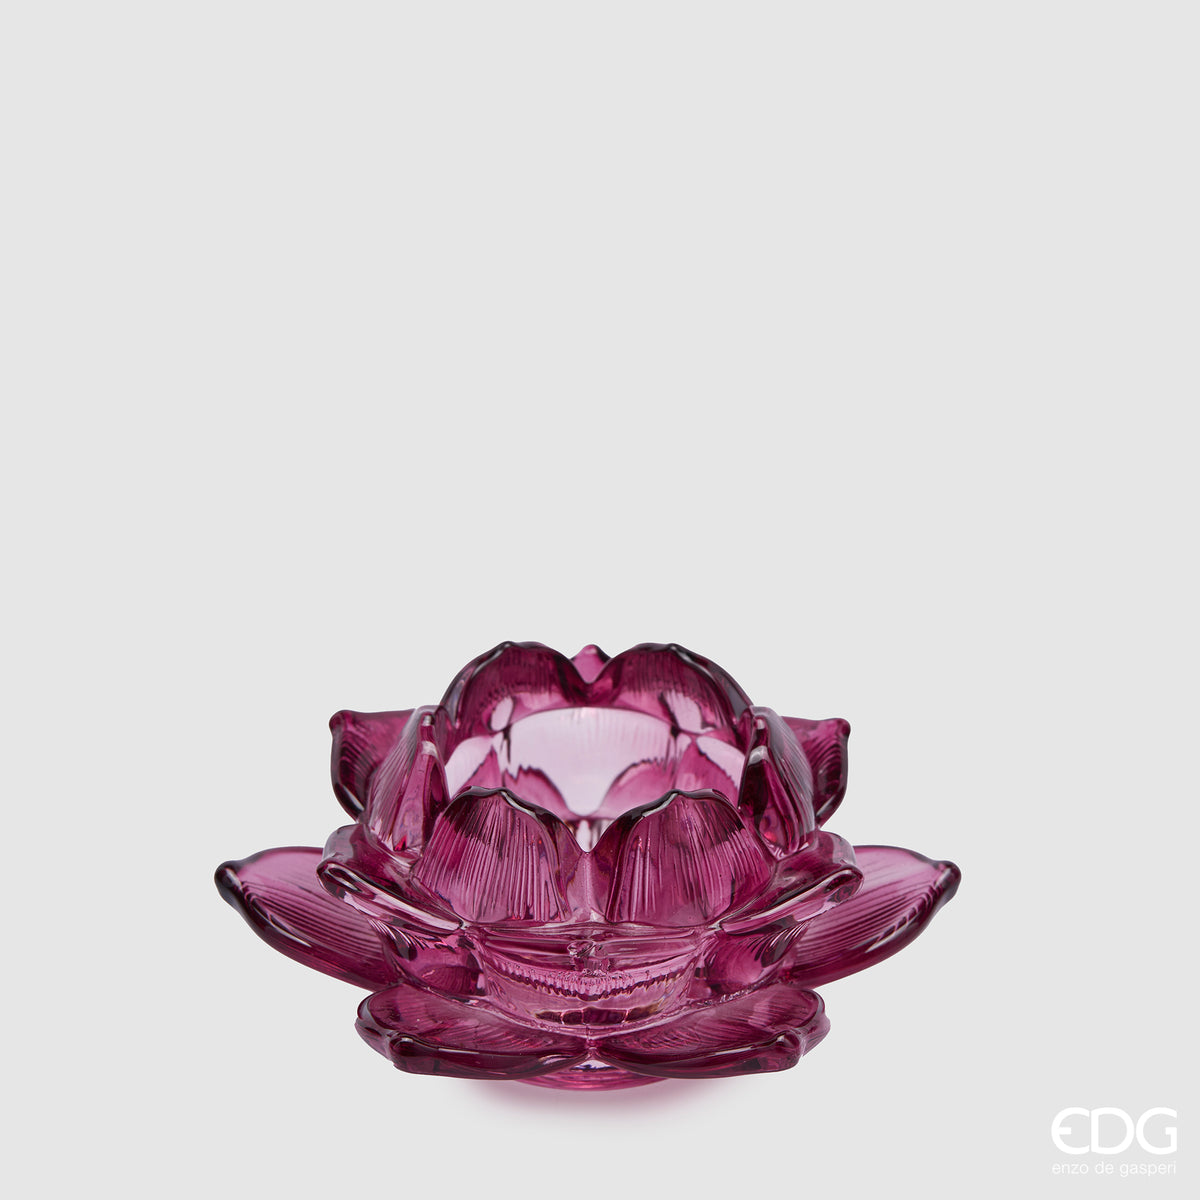 Edg - garnet lotus flower candle holder | rohome